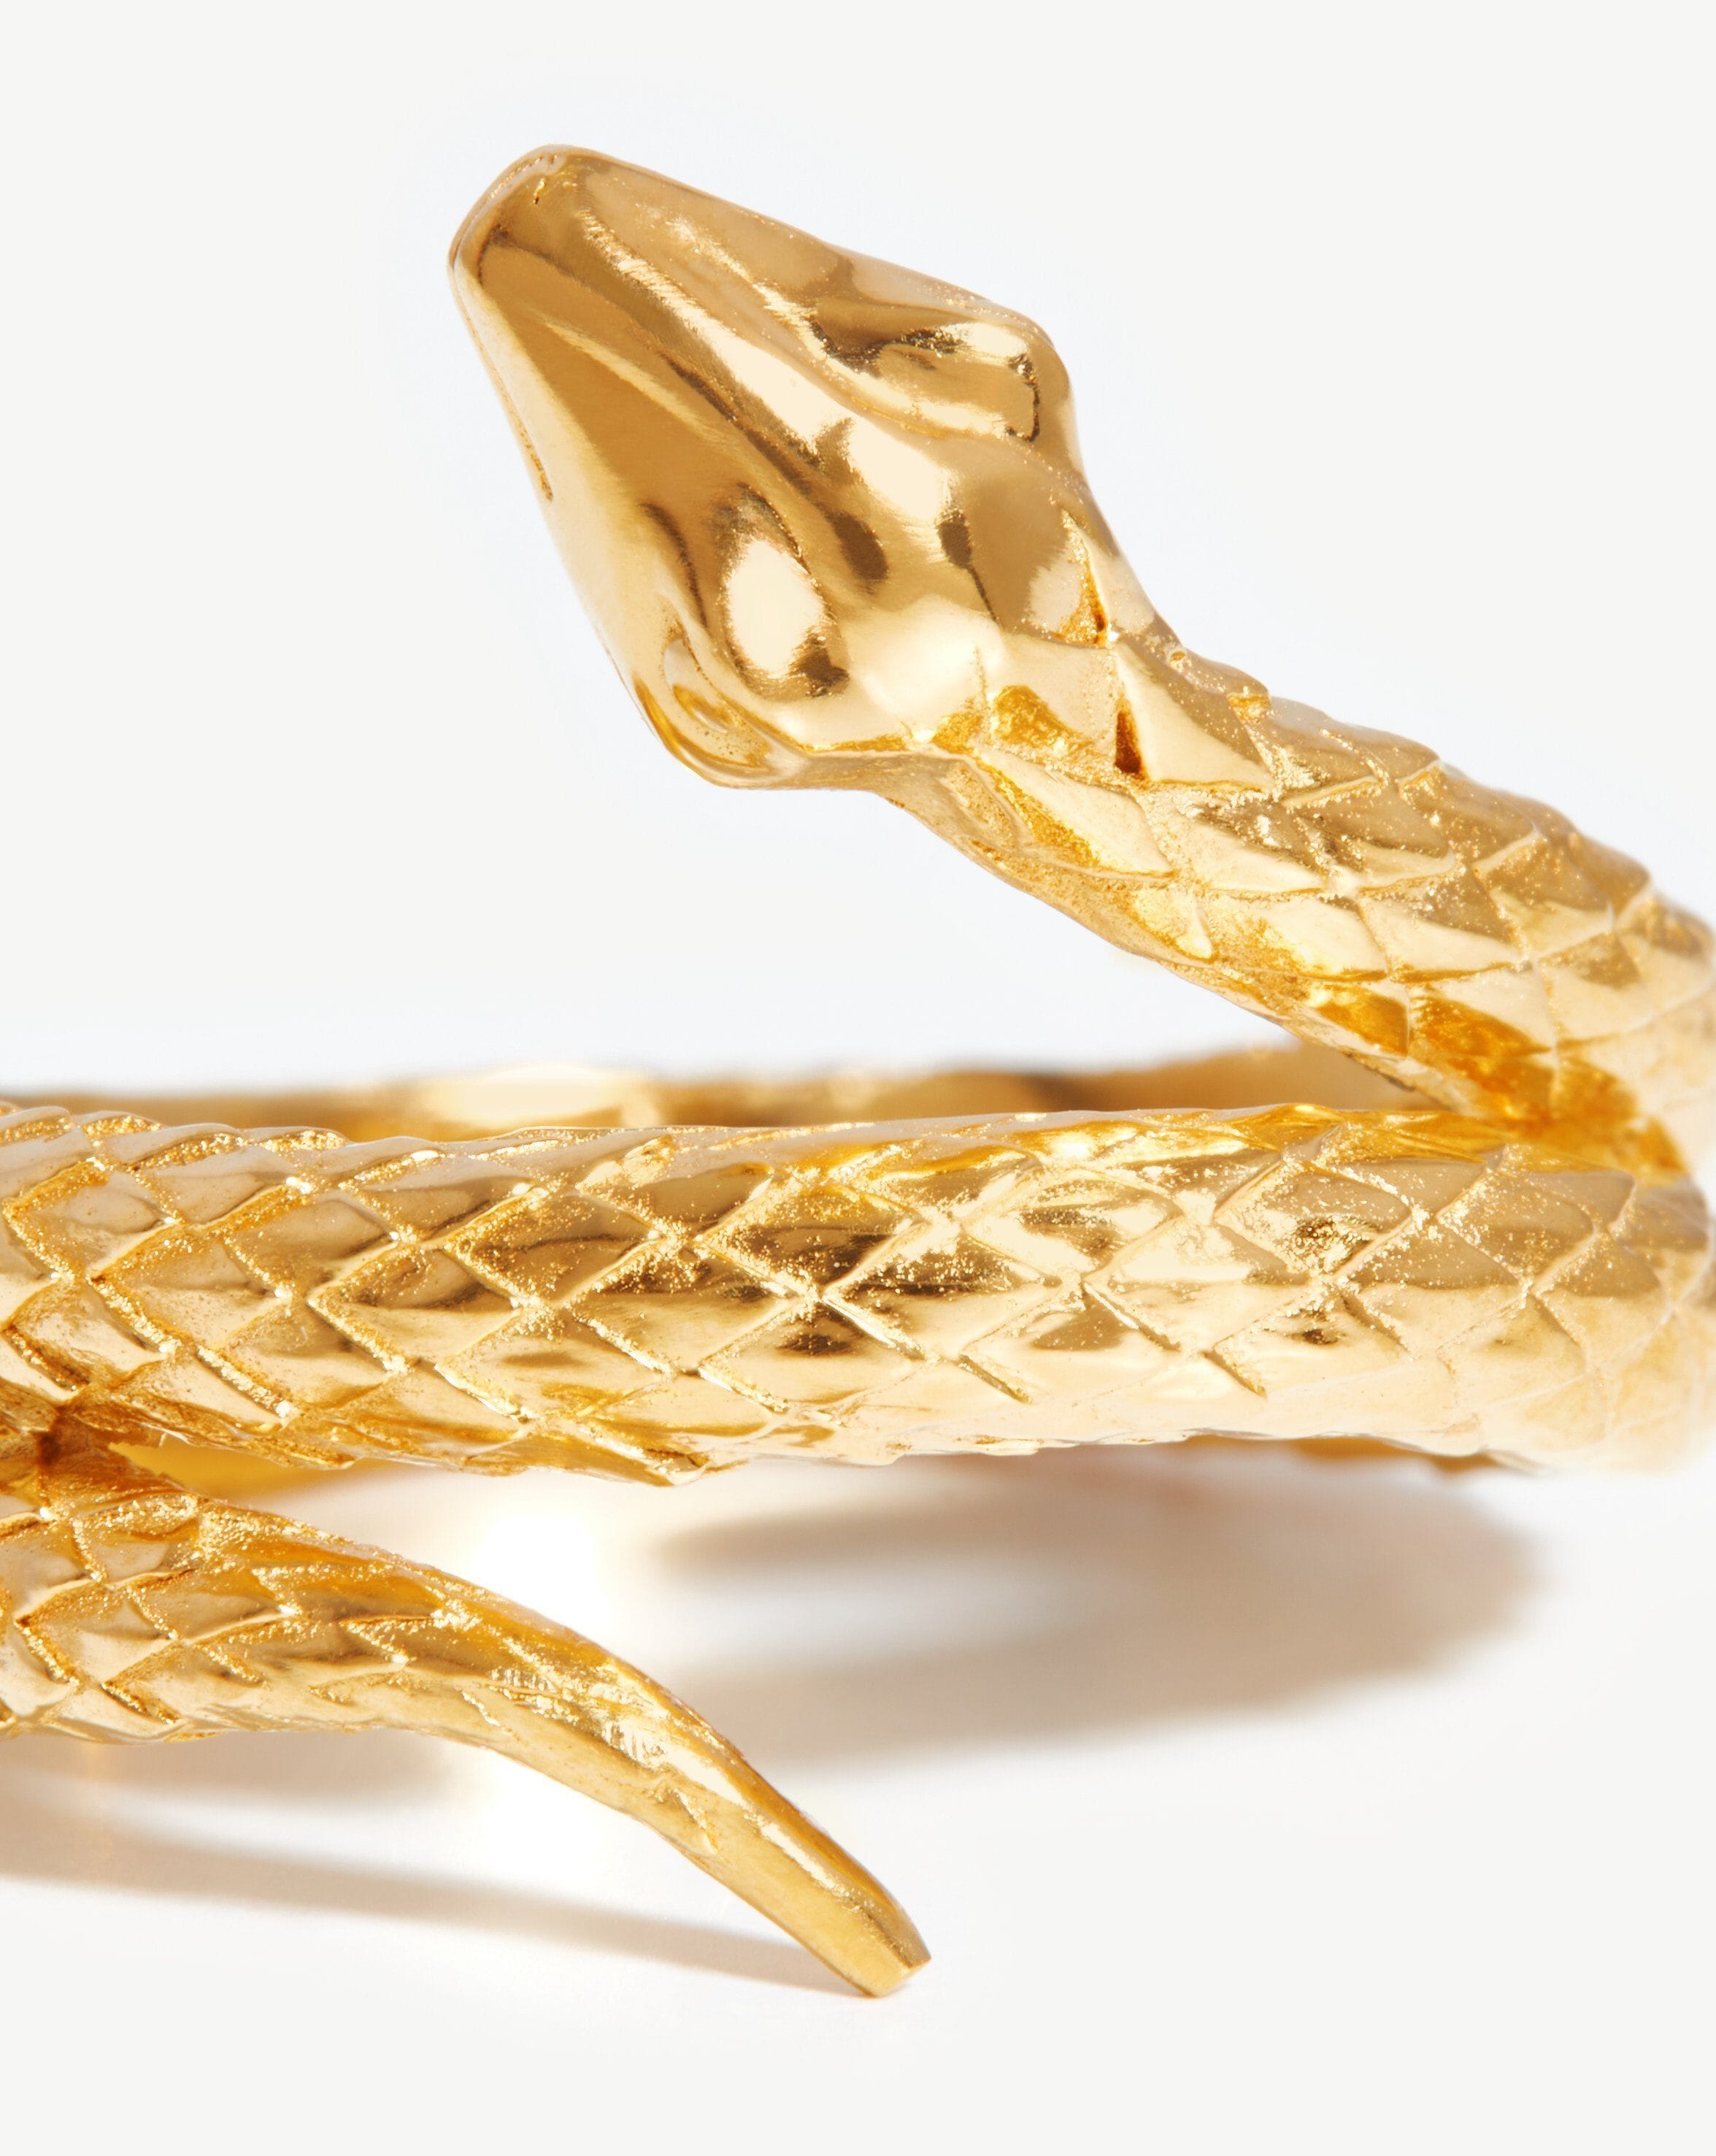 Shop Now, 18K Gold Plated Snake Bracelet